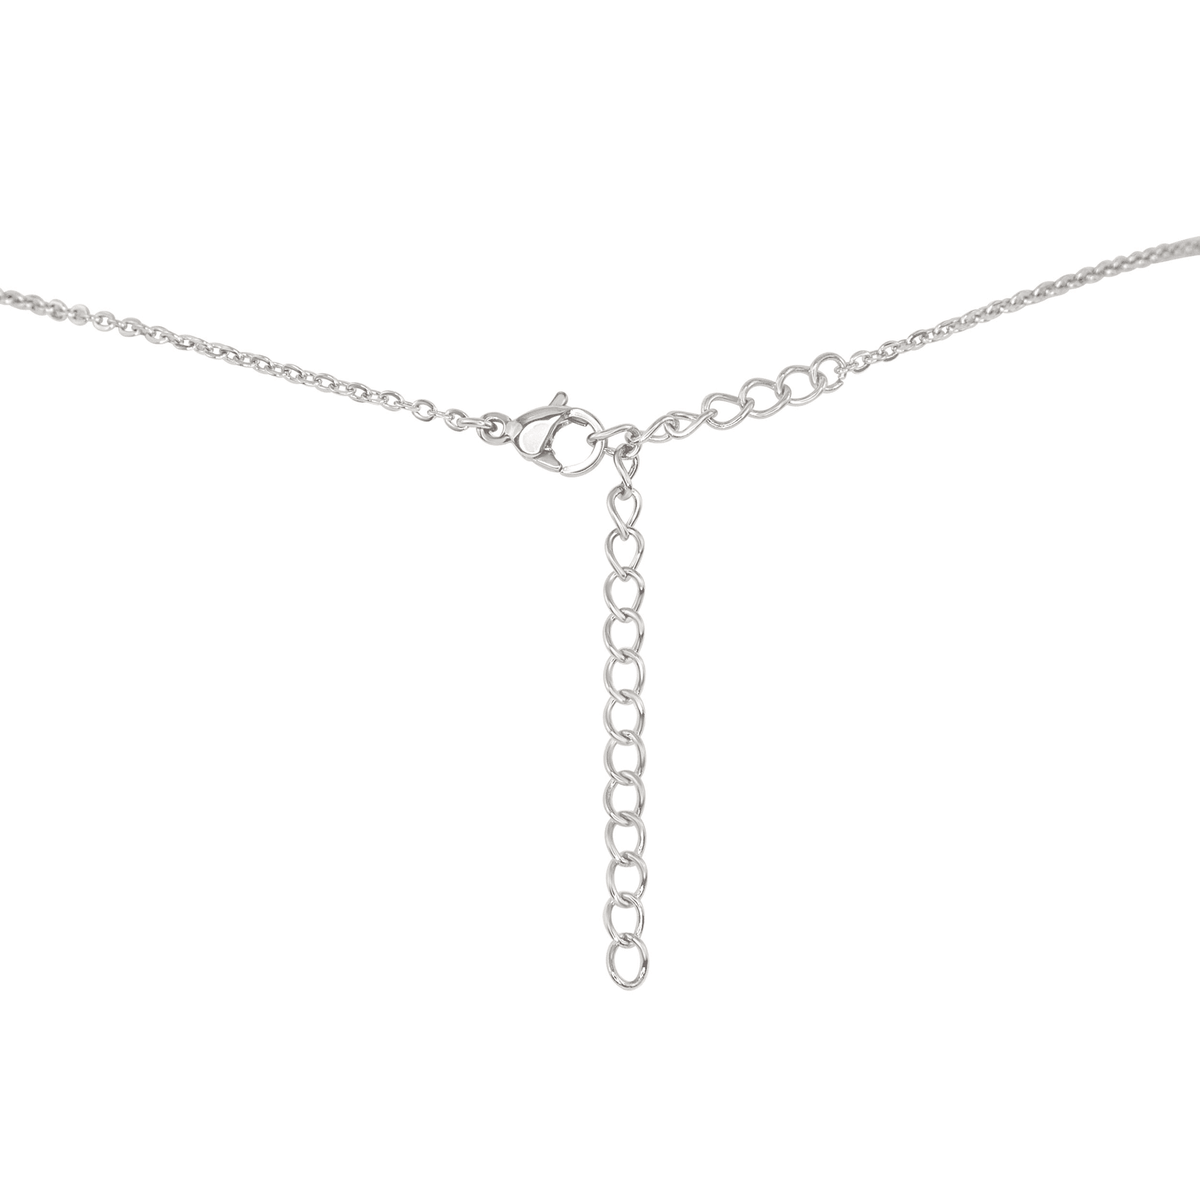 Amazonite Gemstone Chain Layered Choker Necklace - Amazonite Gemstone Chain Layered Choker Necklace - Sterling Silver - Luna Tide Handmade Crystal Jewellery